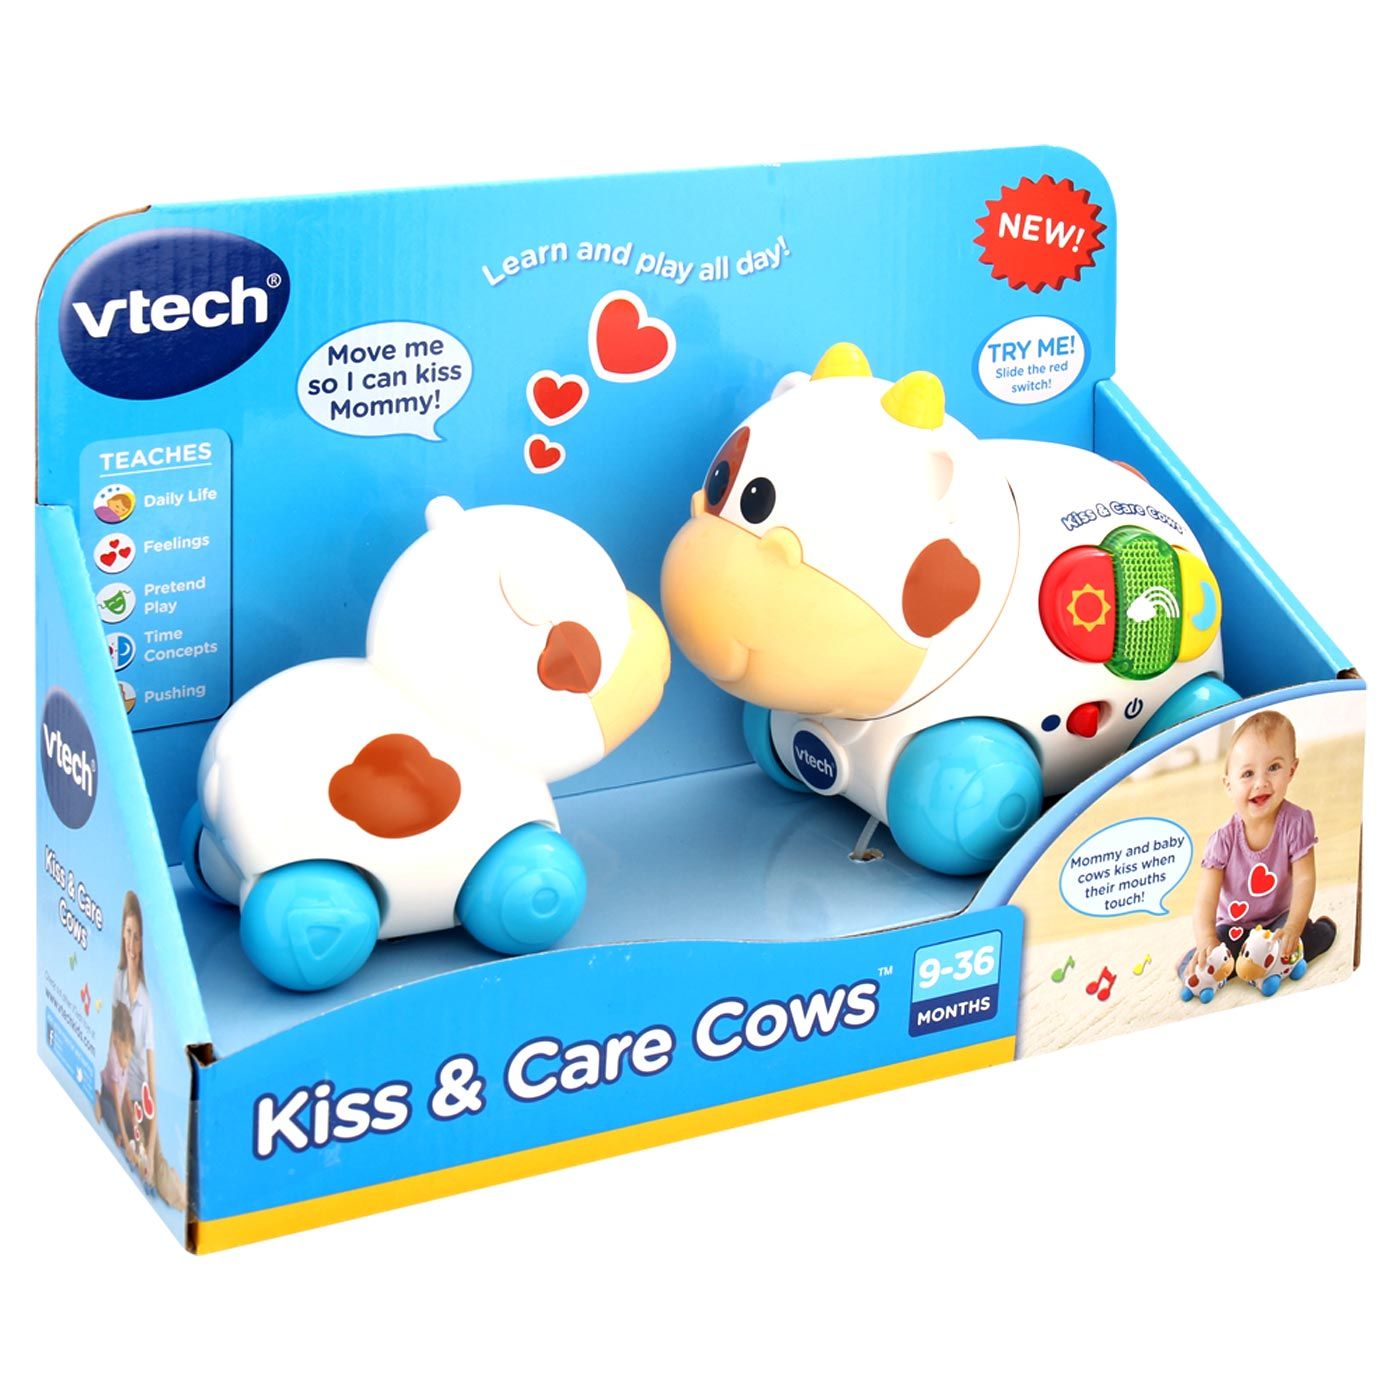 Vtech Kiss & Care Cows - 2